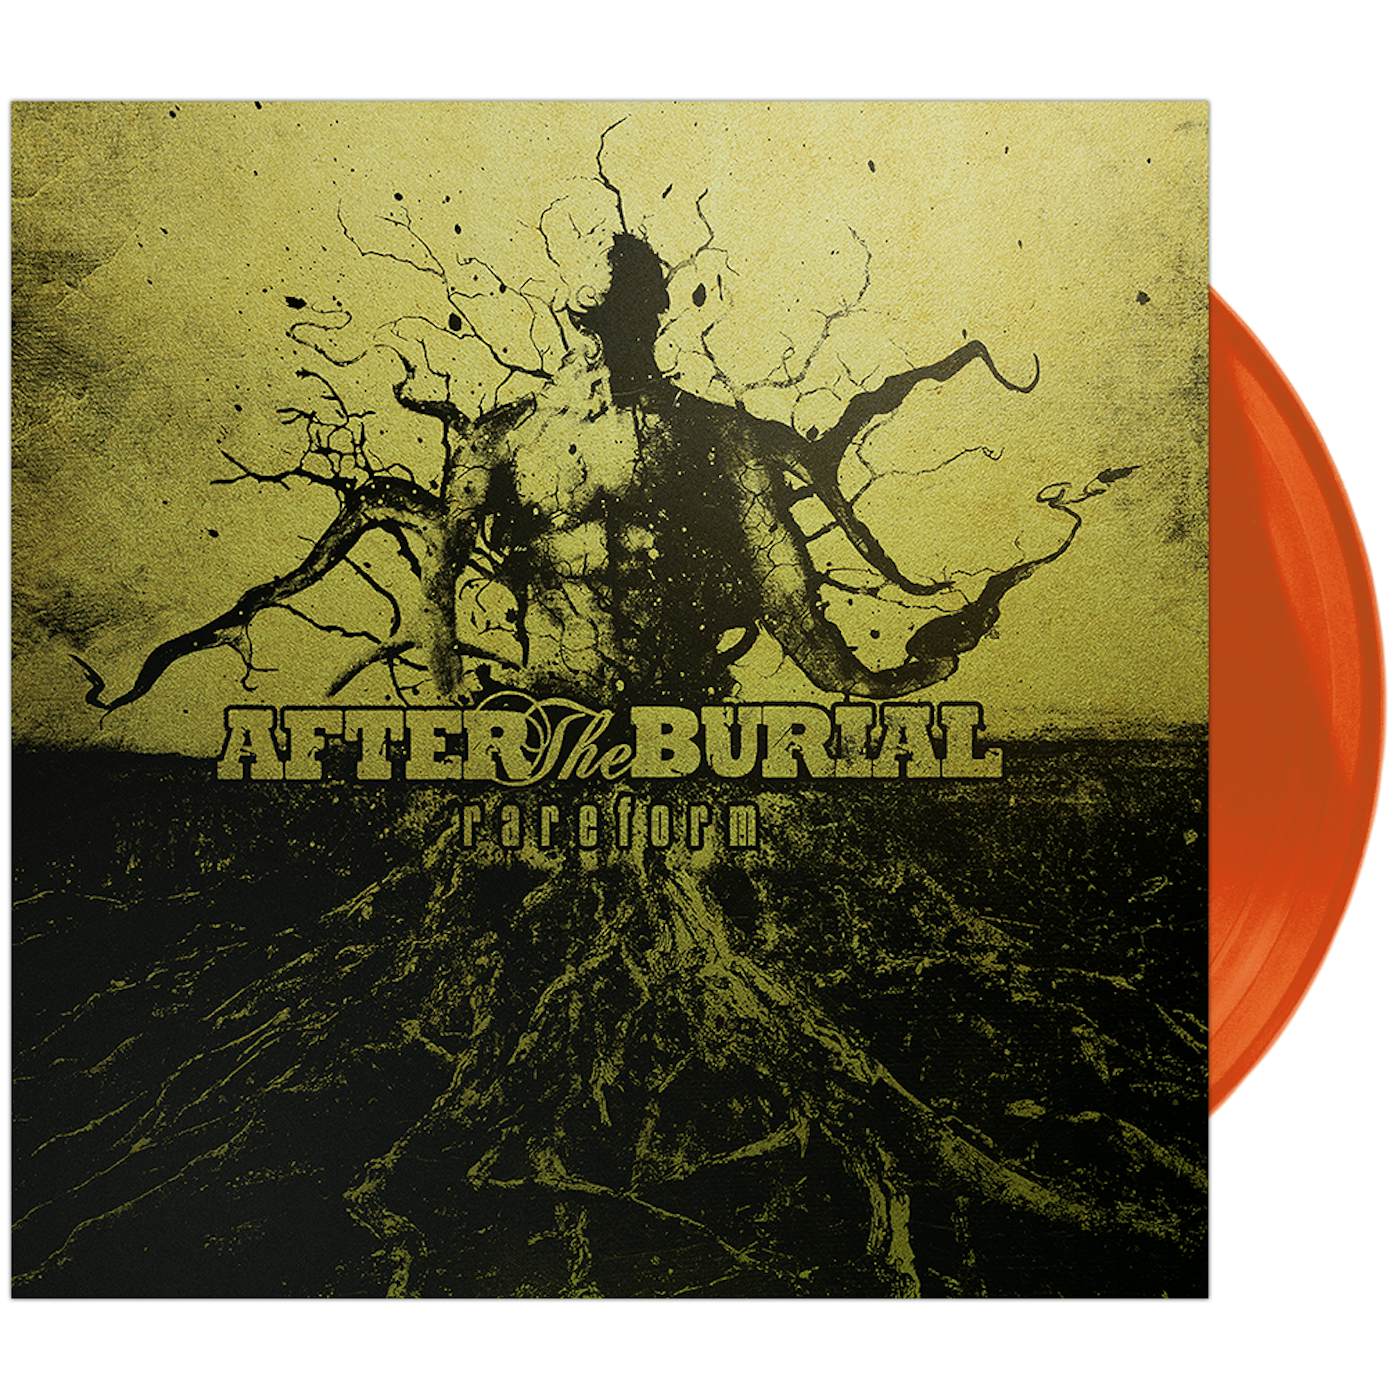 After The Burial - Rareform (10 Year Anniversary) Transparent Orange / Worldwide Variant